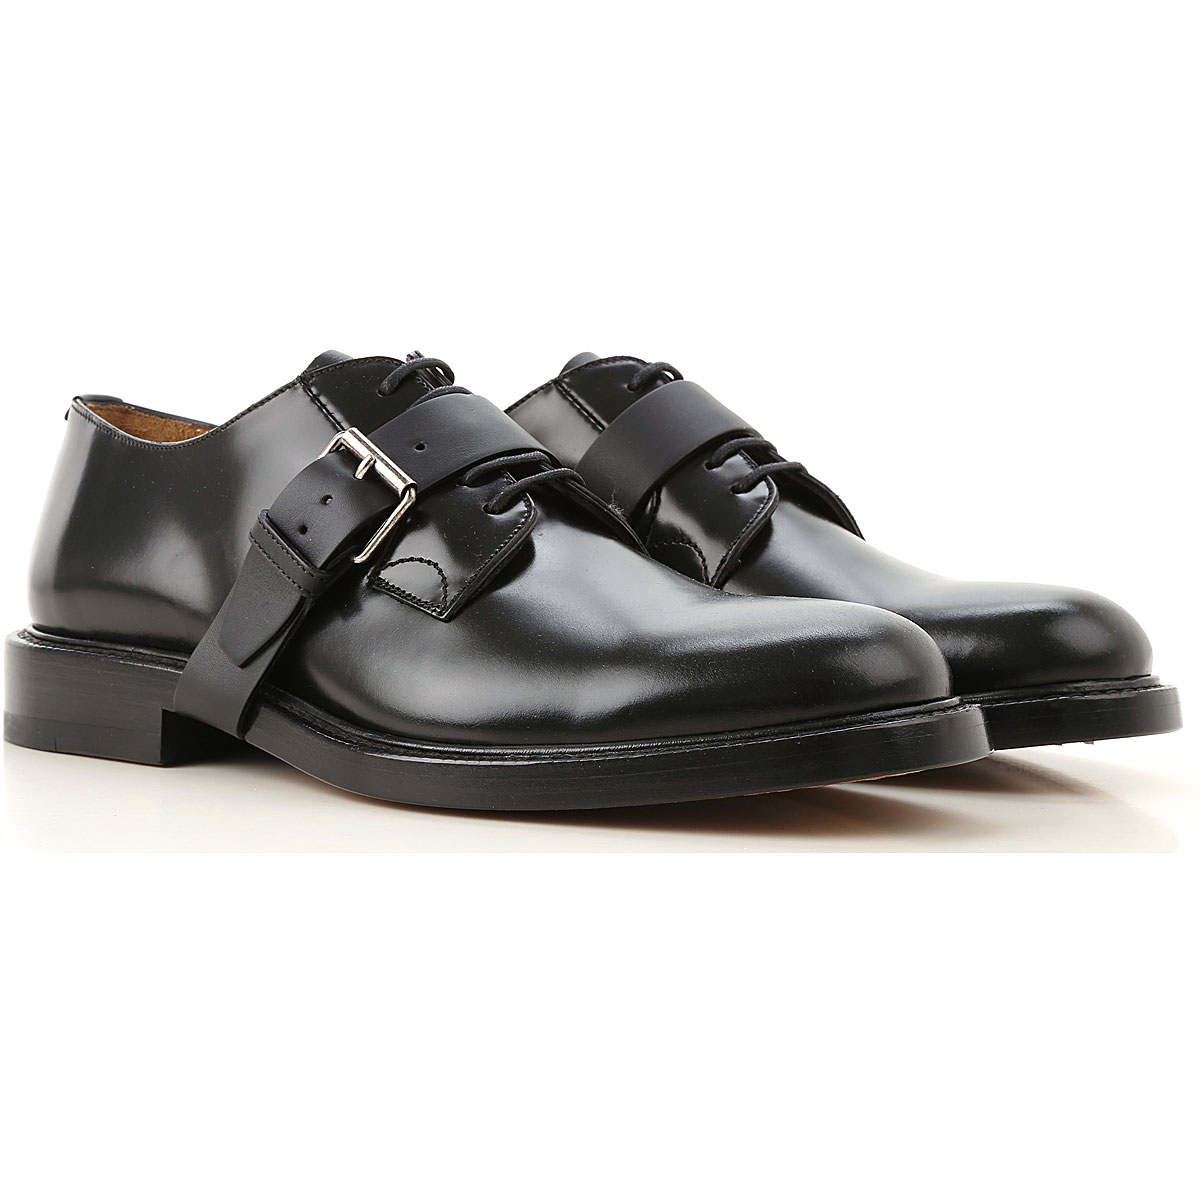 Mens Shoes Valentino Garavani, Style code: ny0s0a23-zvn-0n0